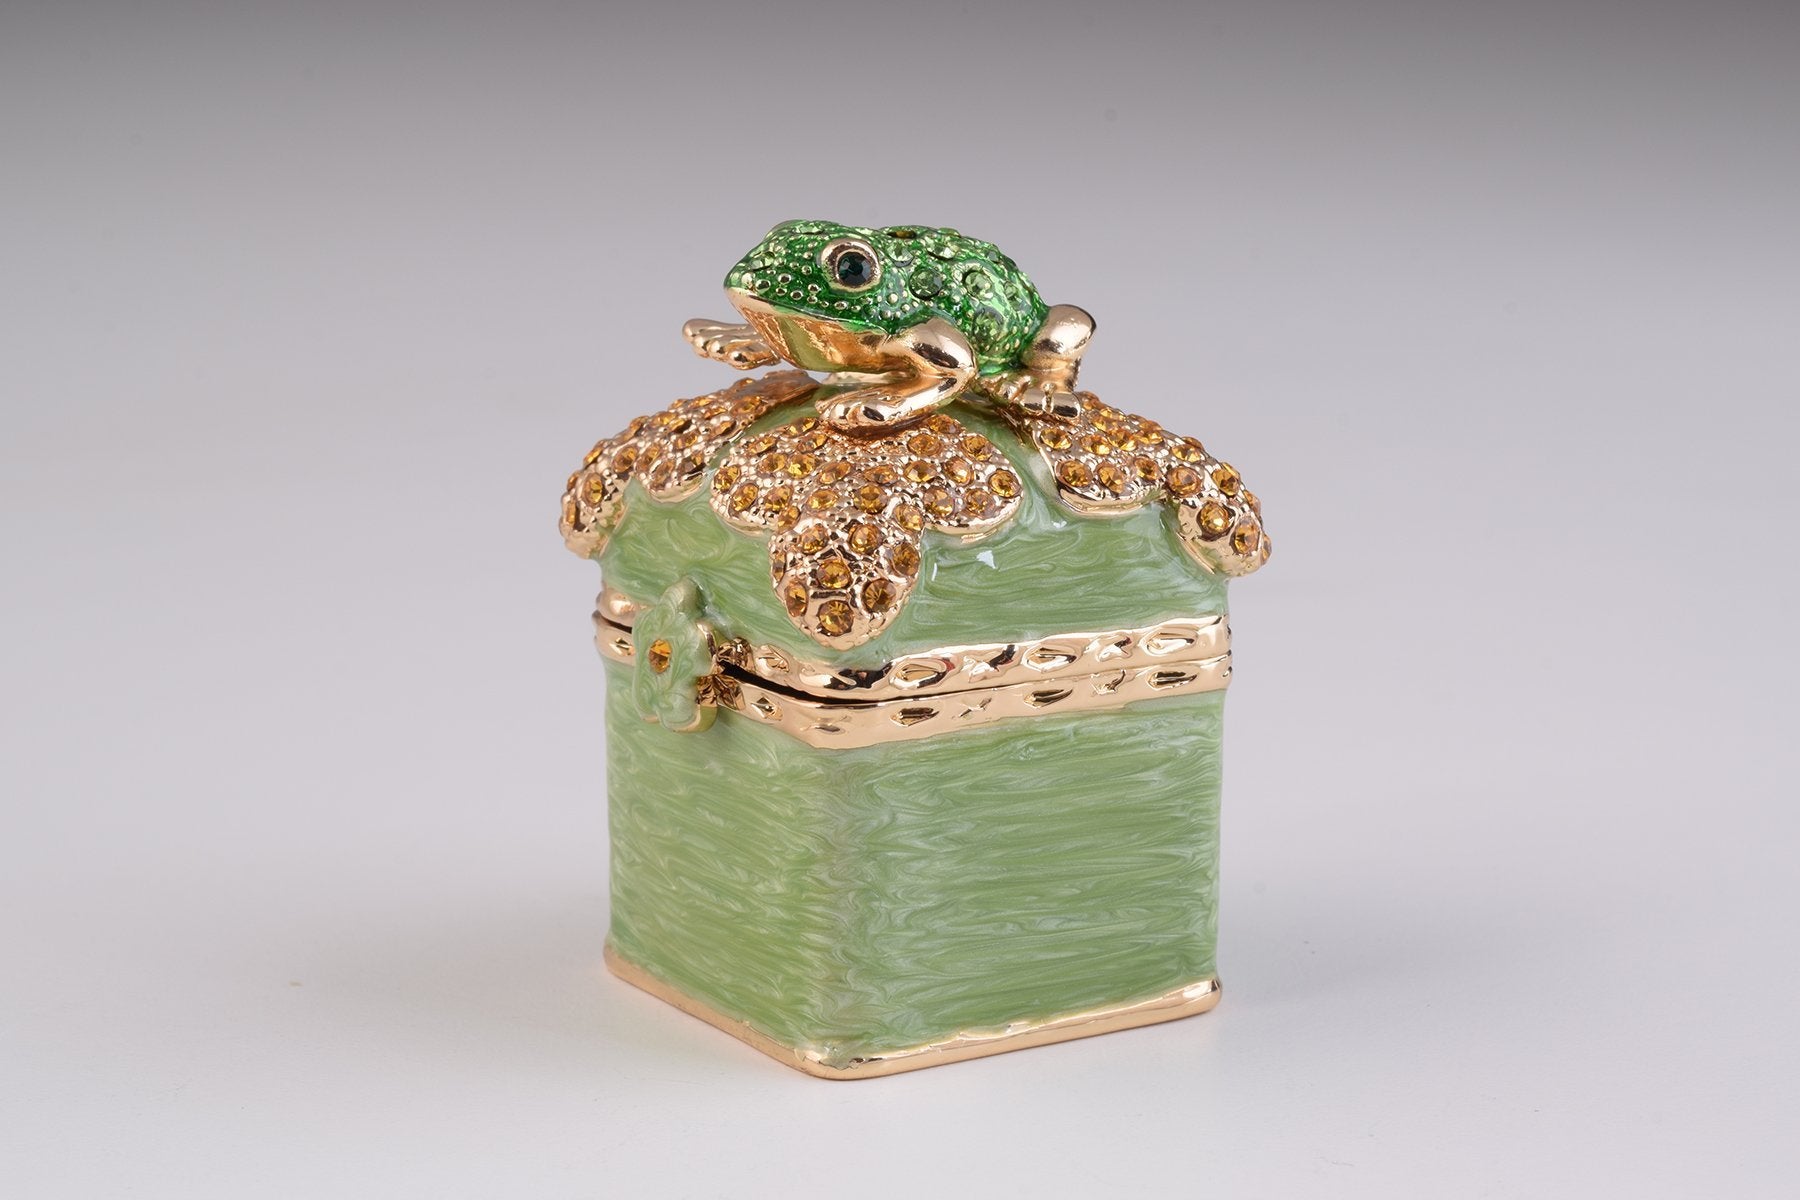 Keren Kopal Green Box with Frog Trinket Box  66.50